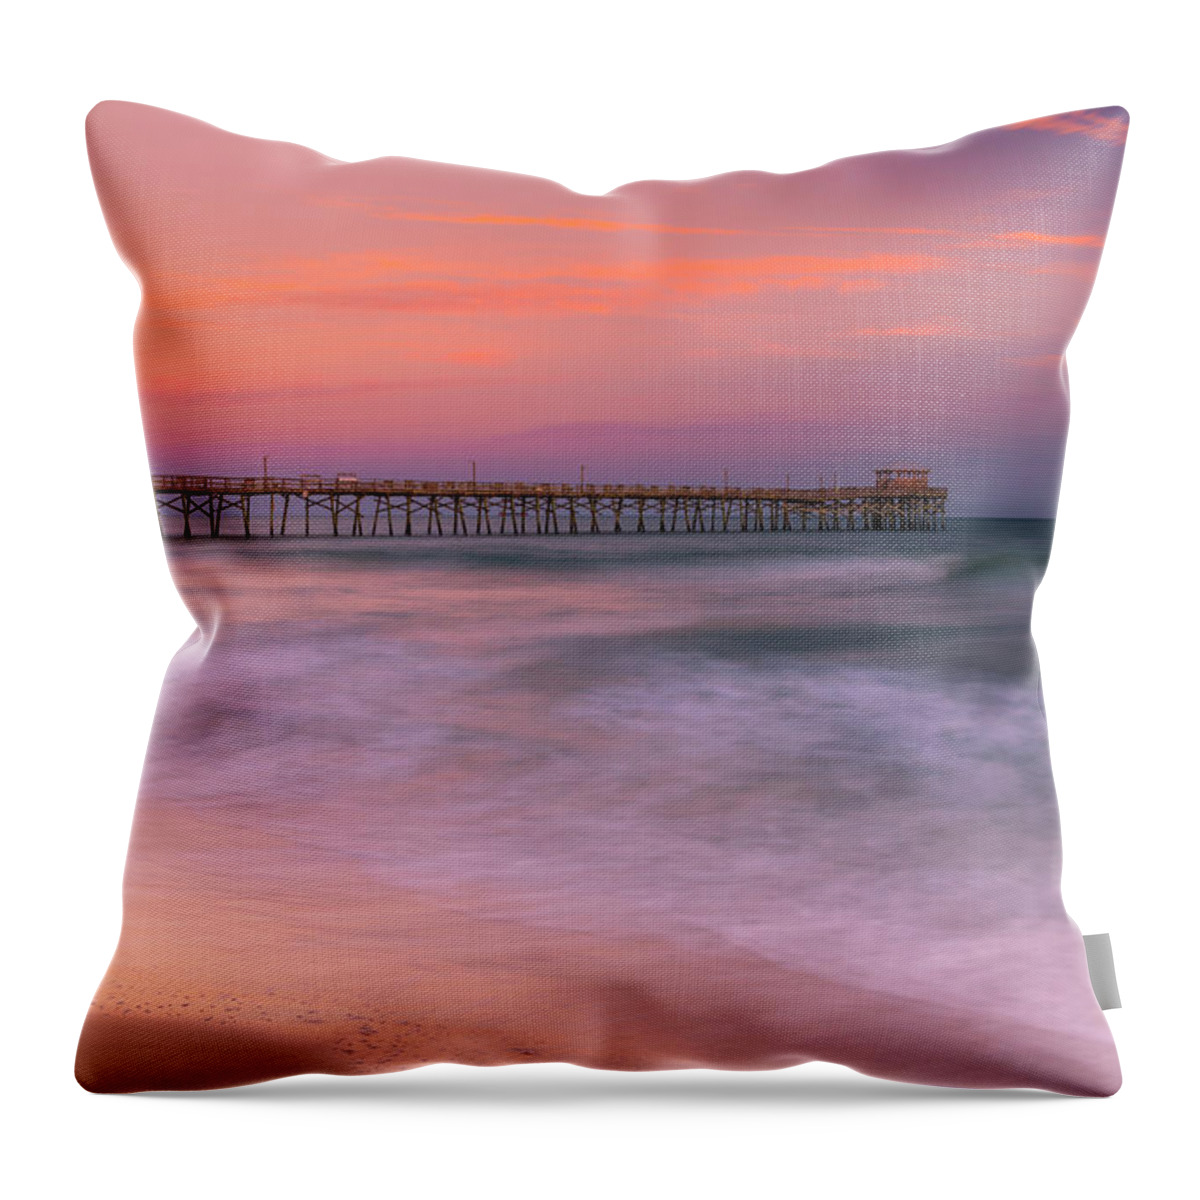 North Carolina Throw Pillow featuring the photograph North Carolina Oceana Fishing Pier at Sunset by Ranjay Mitra